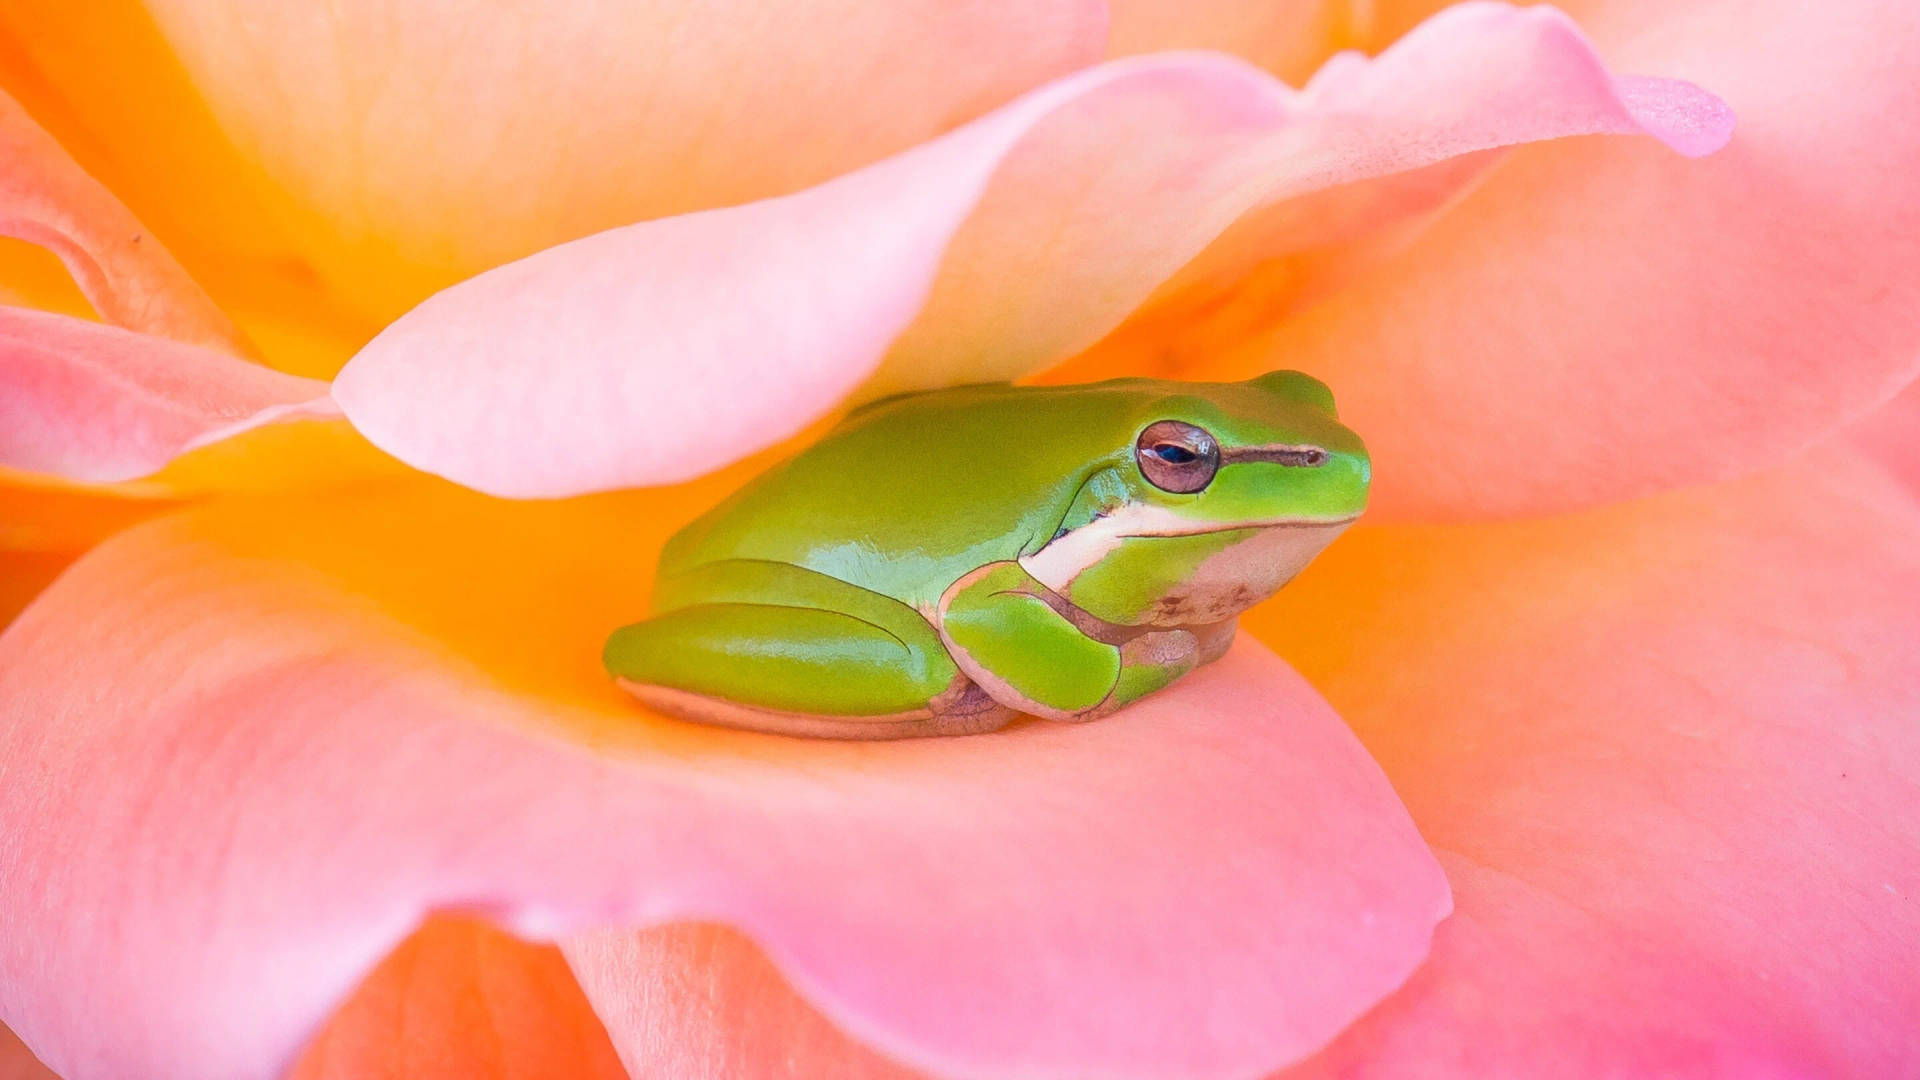 Kawaii Frog In A Pink Flower